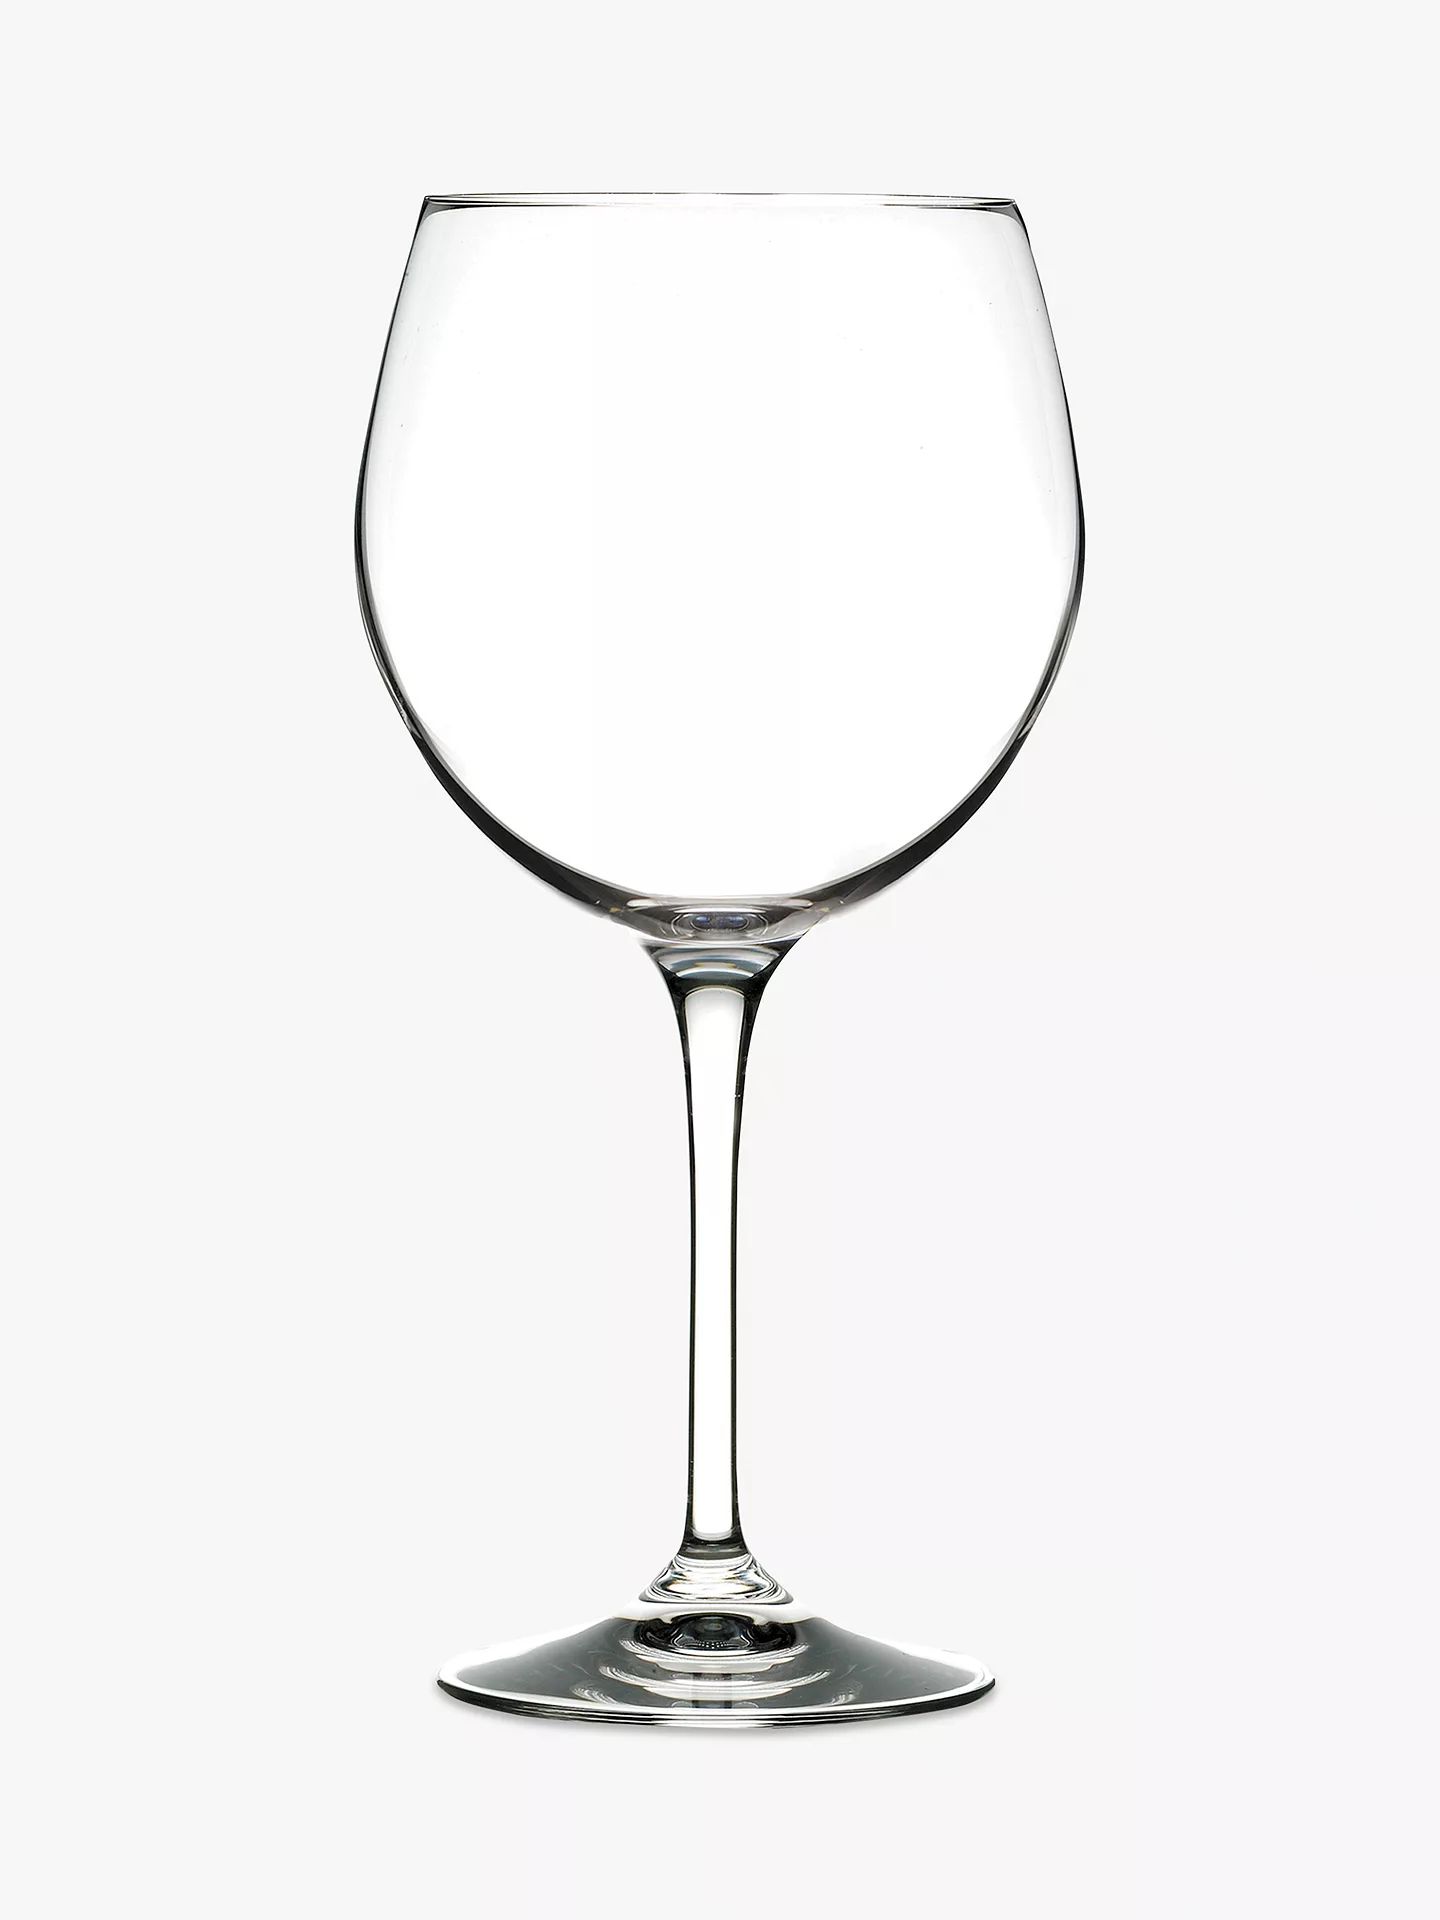 Soho Home Monico Red Wine Glasses, Set of 6, Clear, 670ml | John Lewis UK